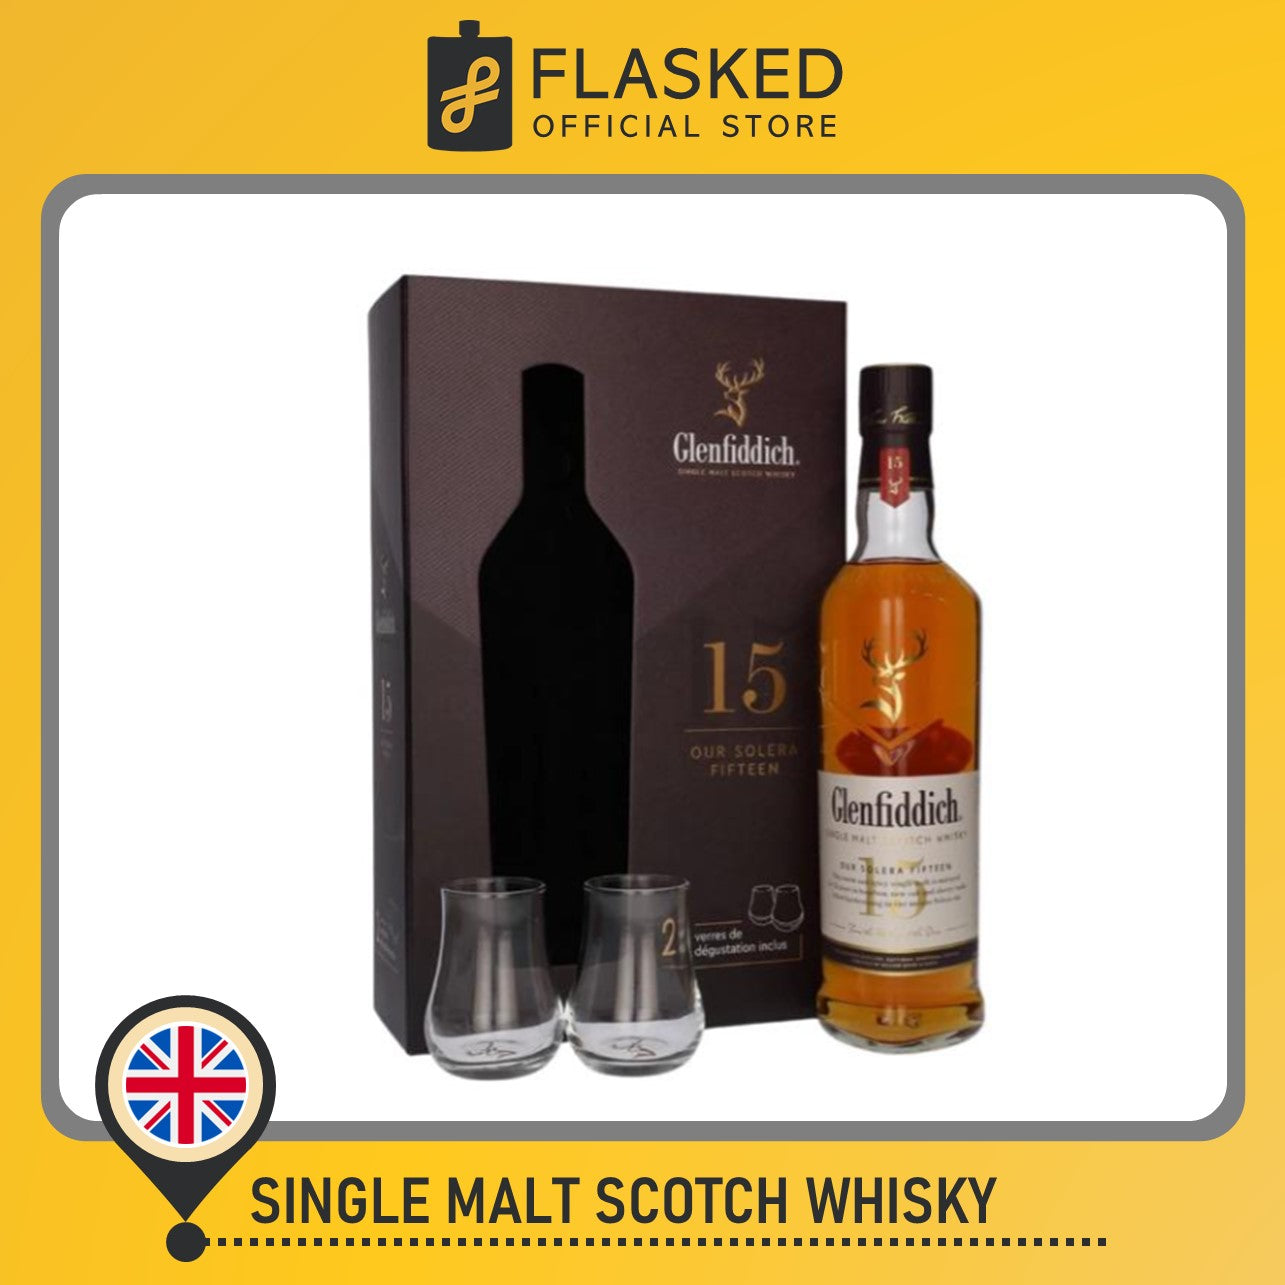 Glenfiddich 15 Year Old Whisky 700ml